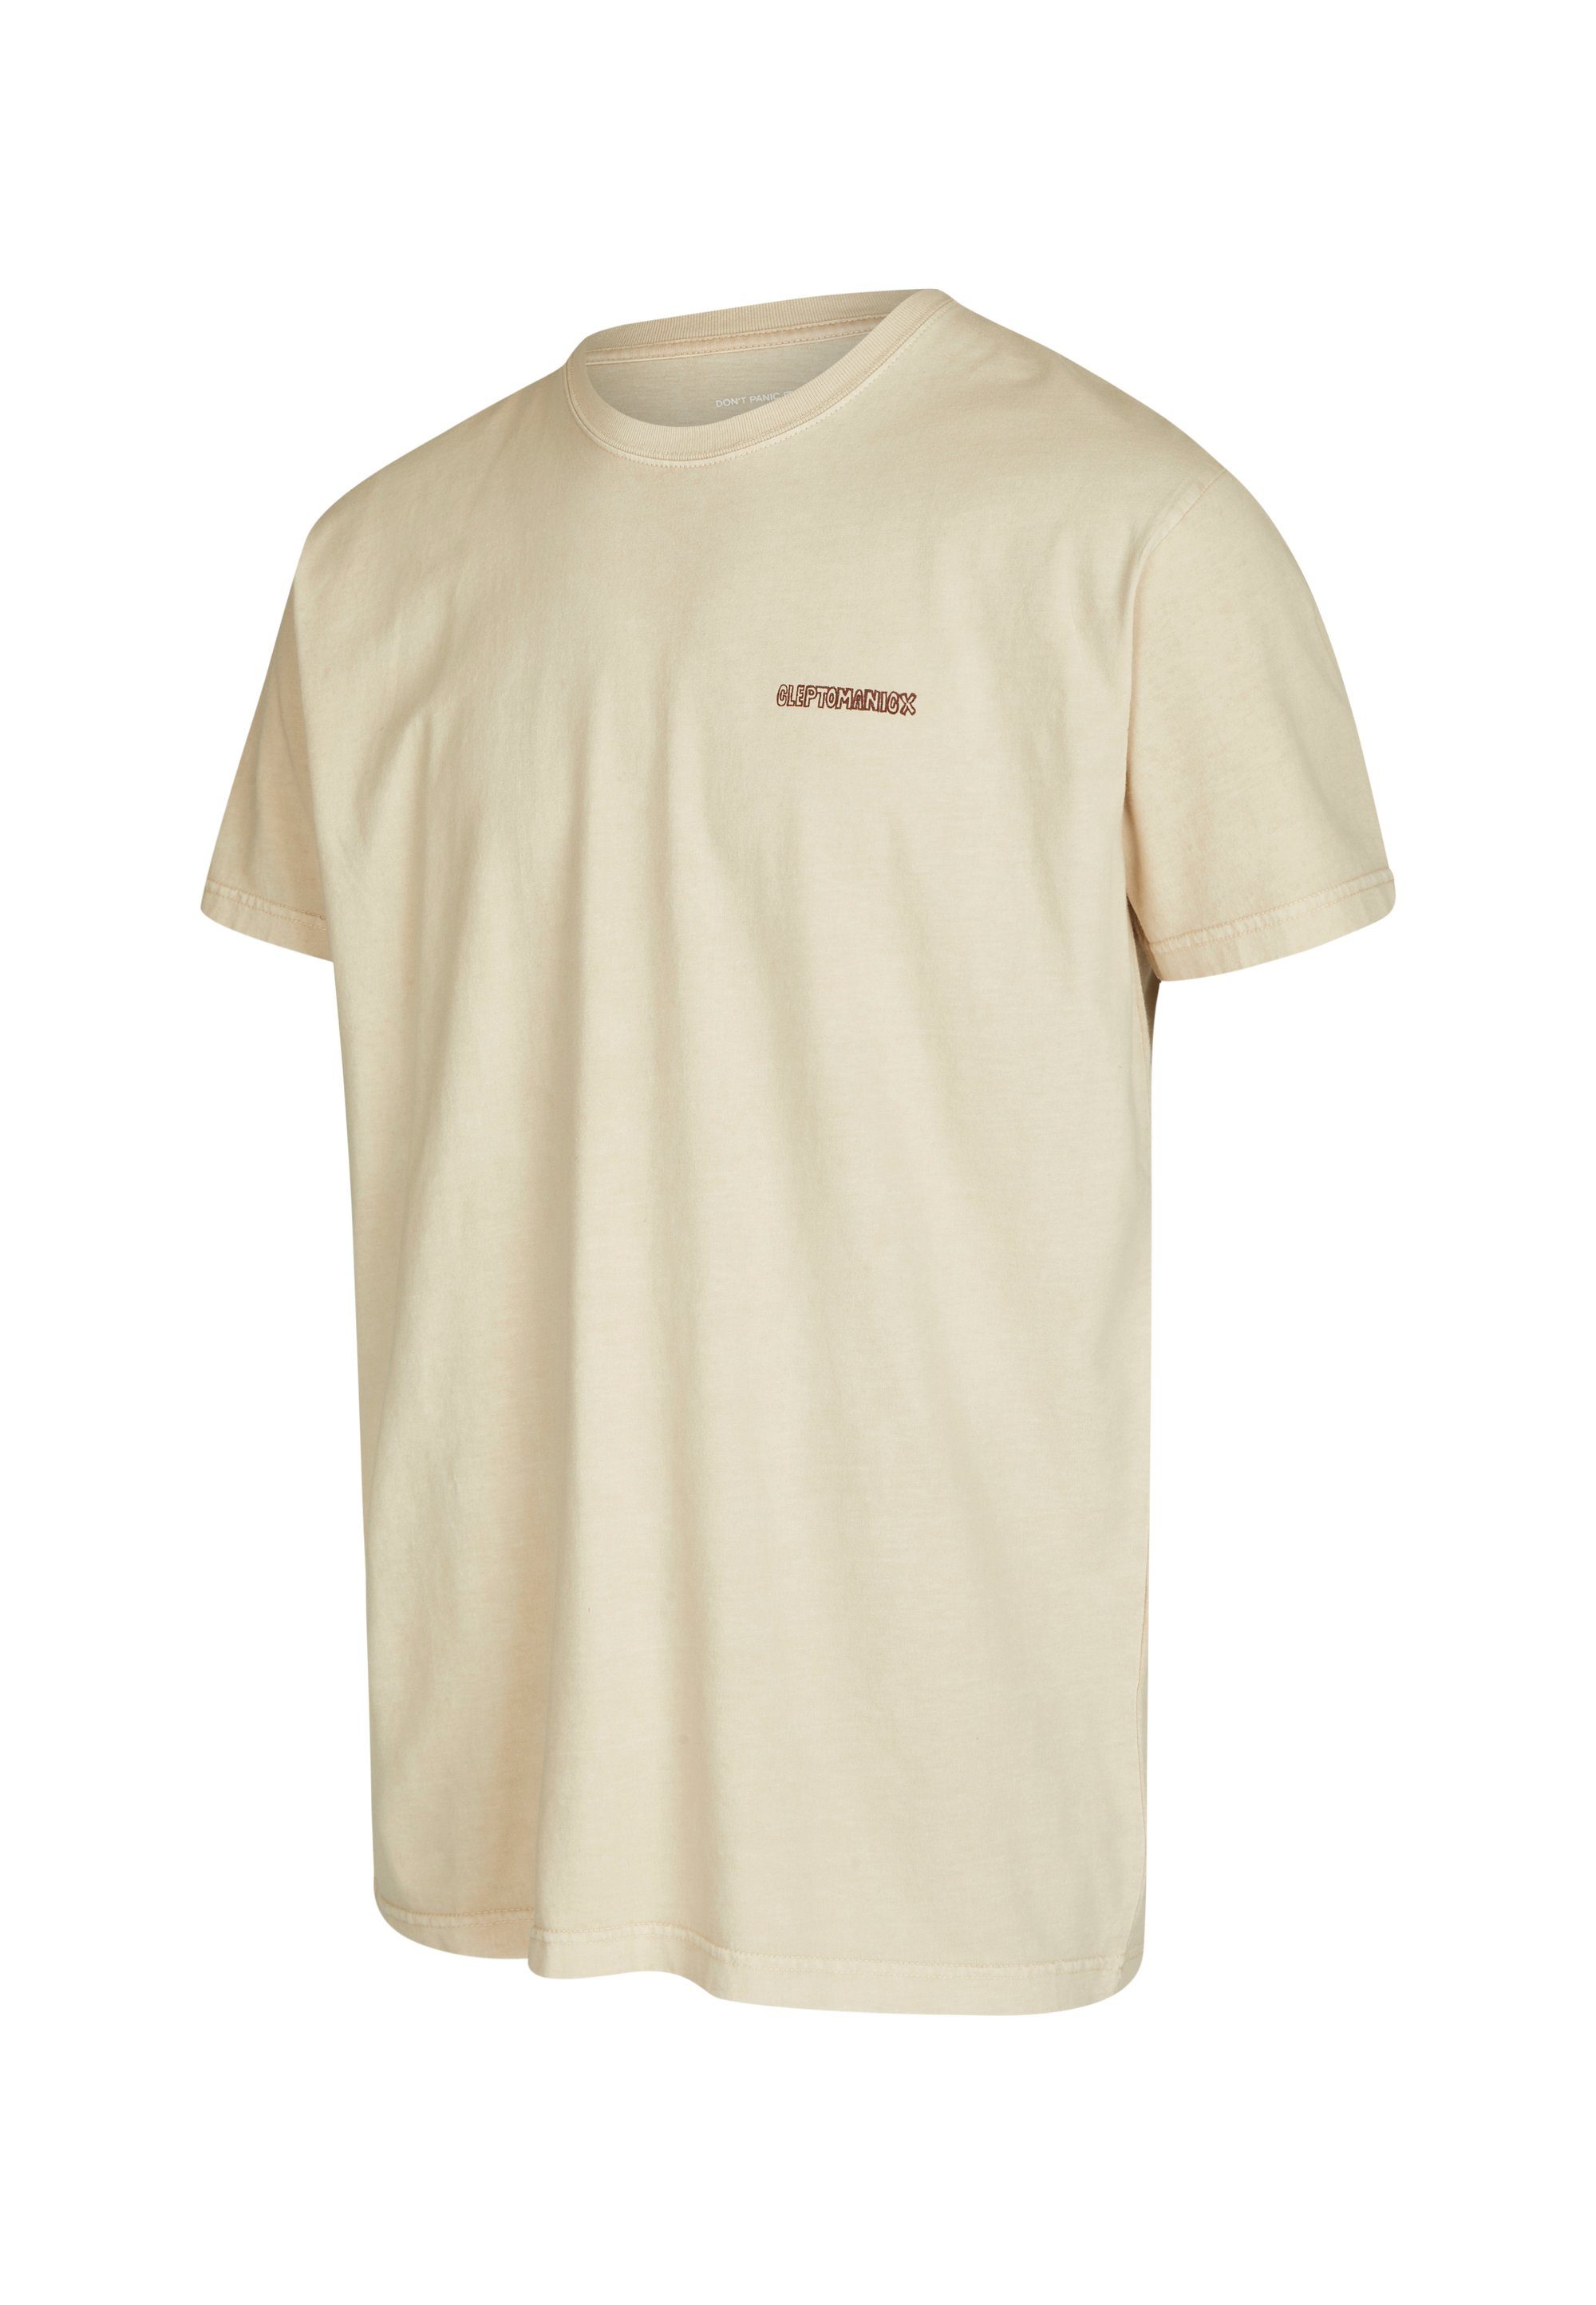 Unconscious coolem T-Shirt Print mit braun Cleptomanicx